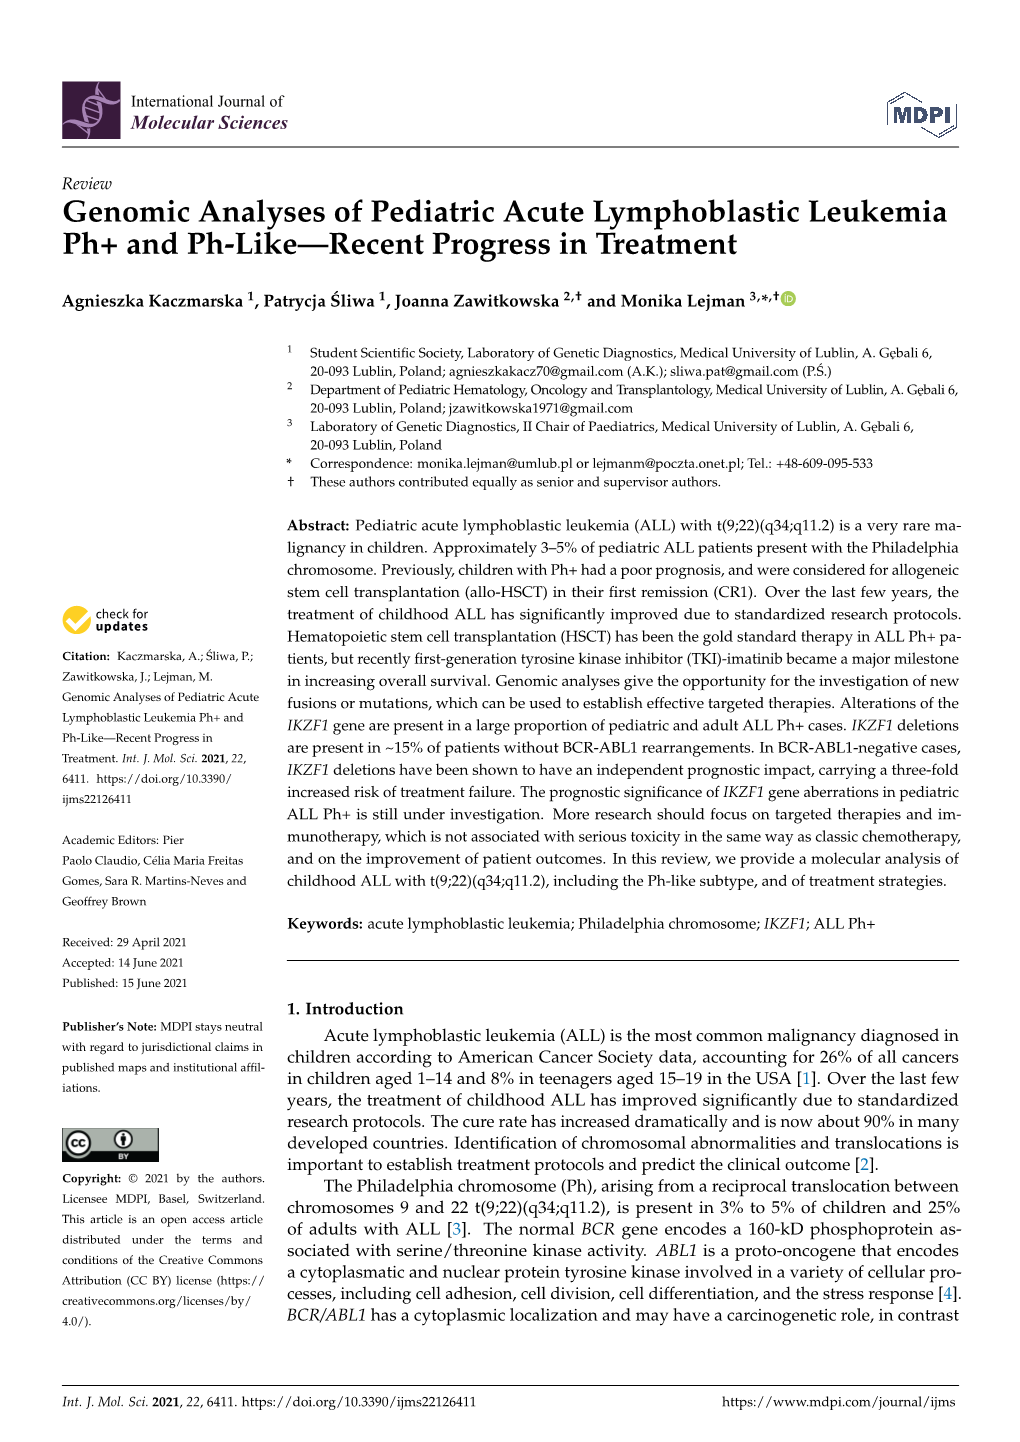 Genomic Analyses of Pediatric Acute Lymphoblastic Leukemia Ph+ and Ph-Like—Recent Progress in Treatment